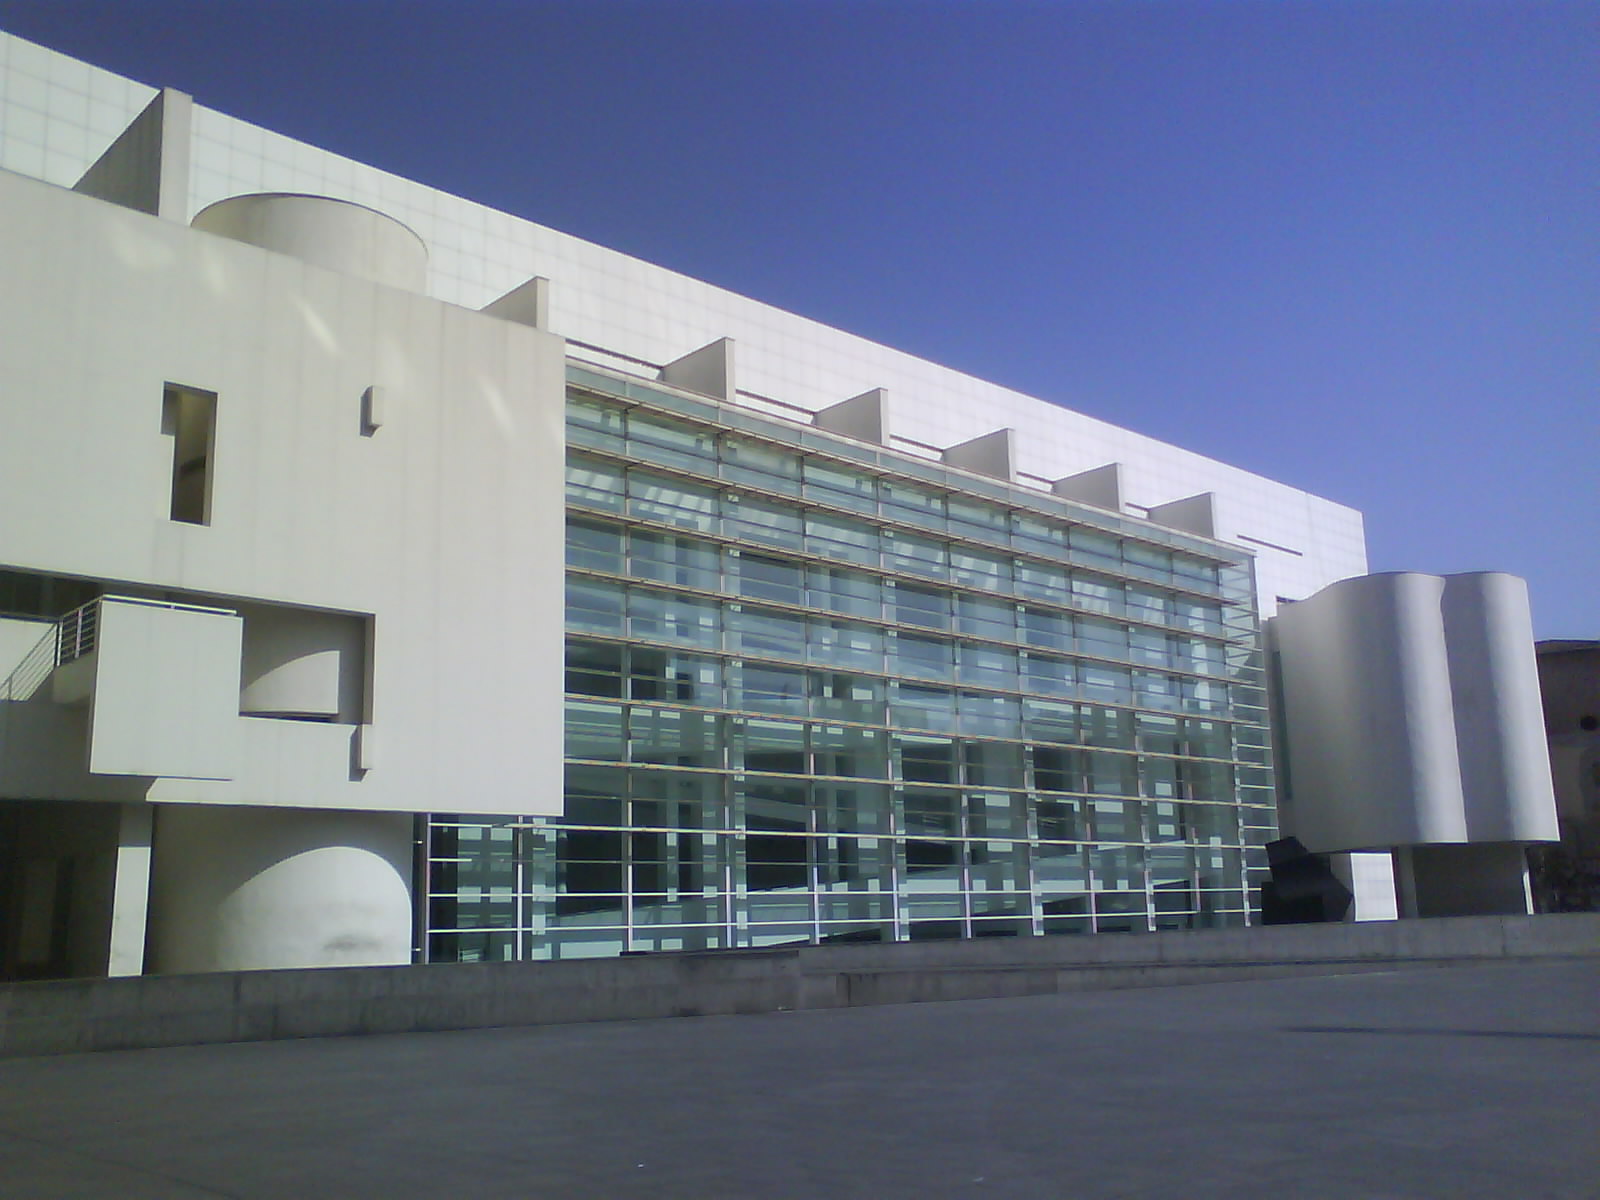 Museu d’Art Contemporani de Barcelona (MACBA)